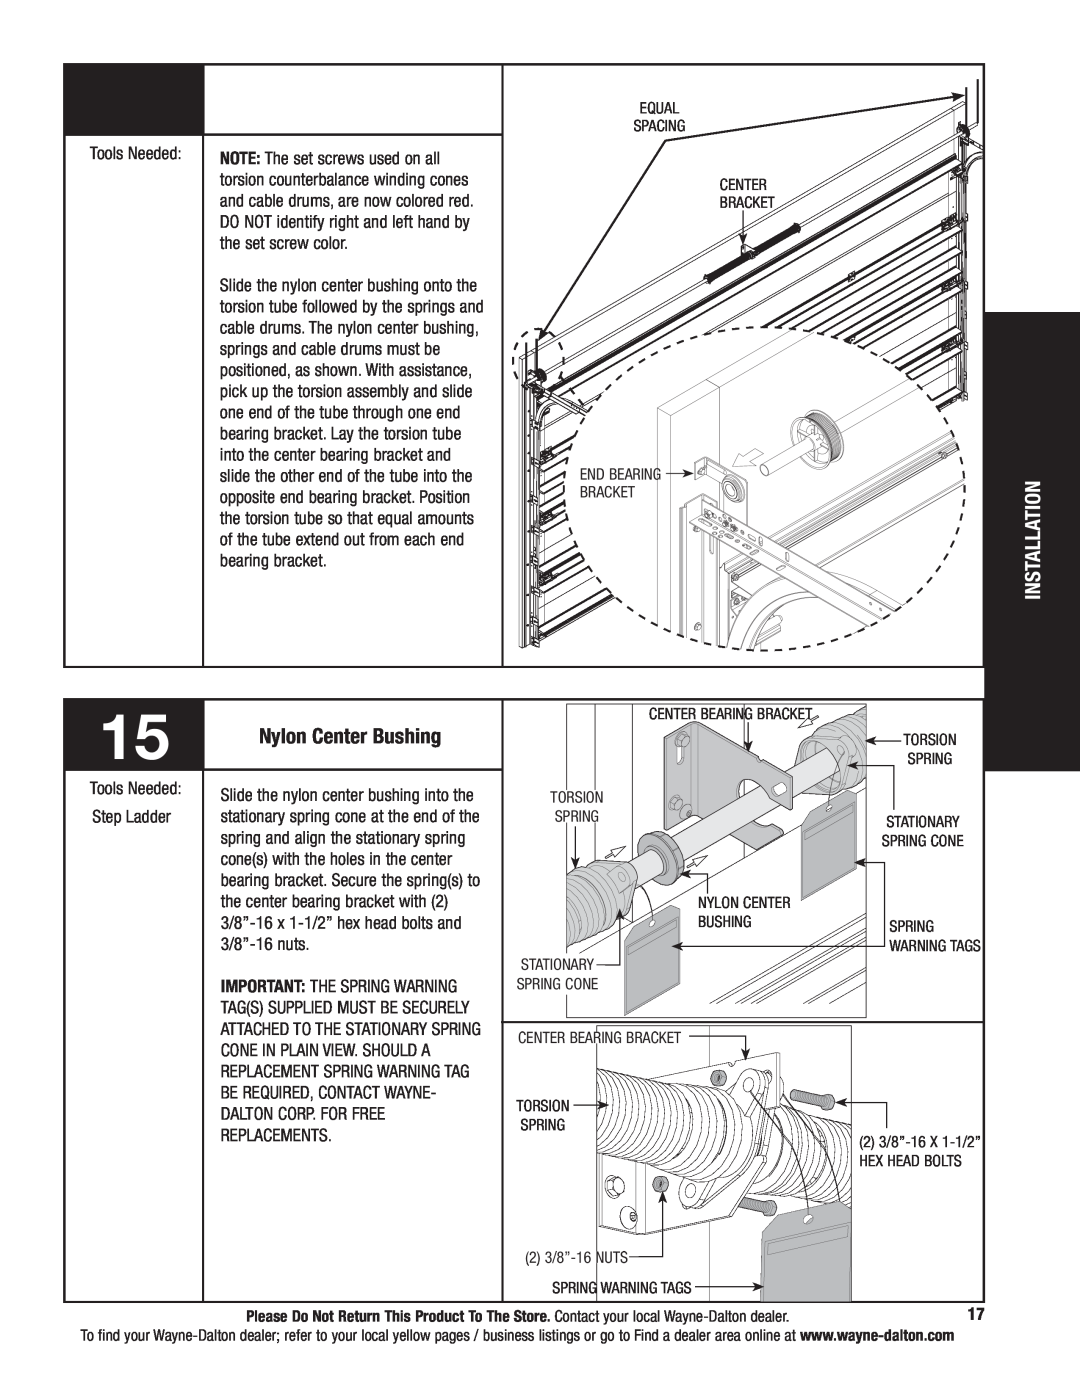 Wayne-Dalton 9800 installation instructions Nylon Center Bushing, Installation 